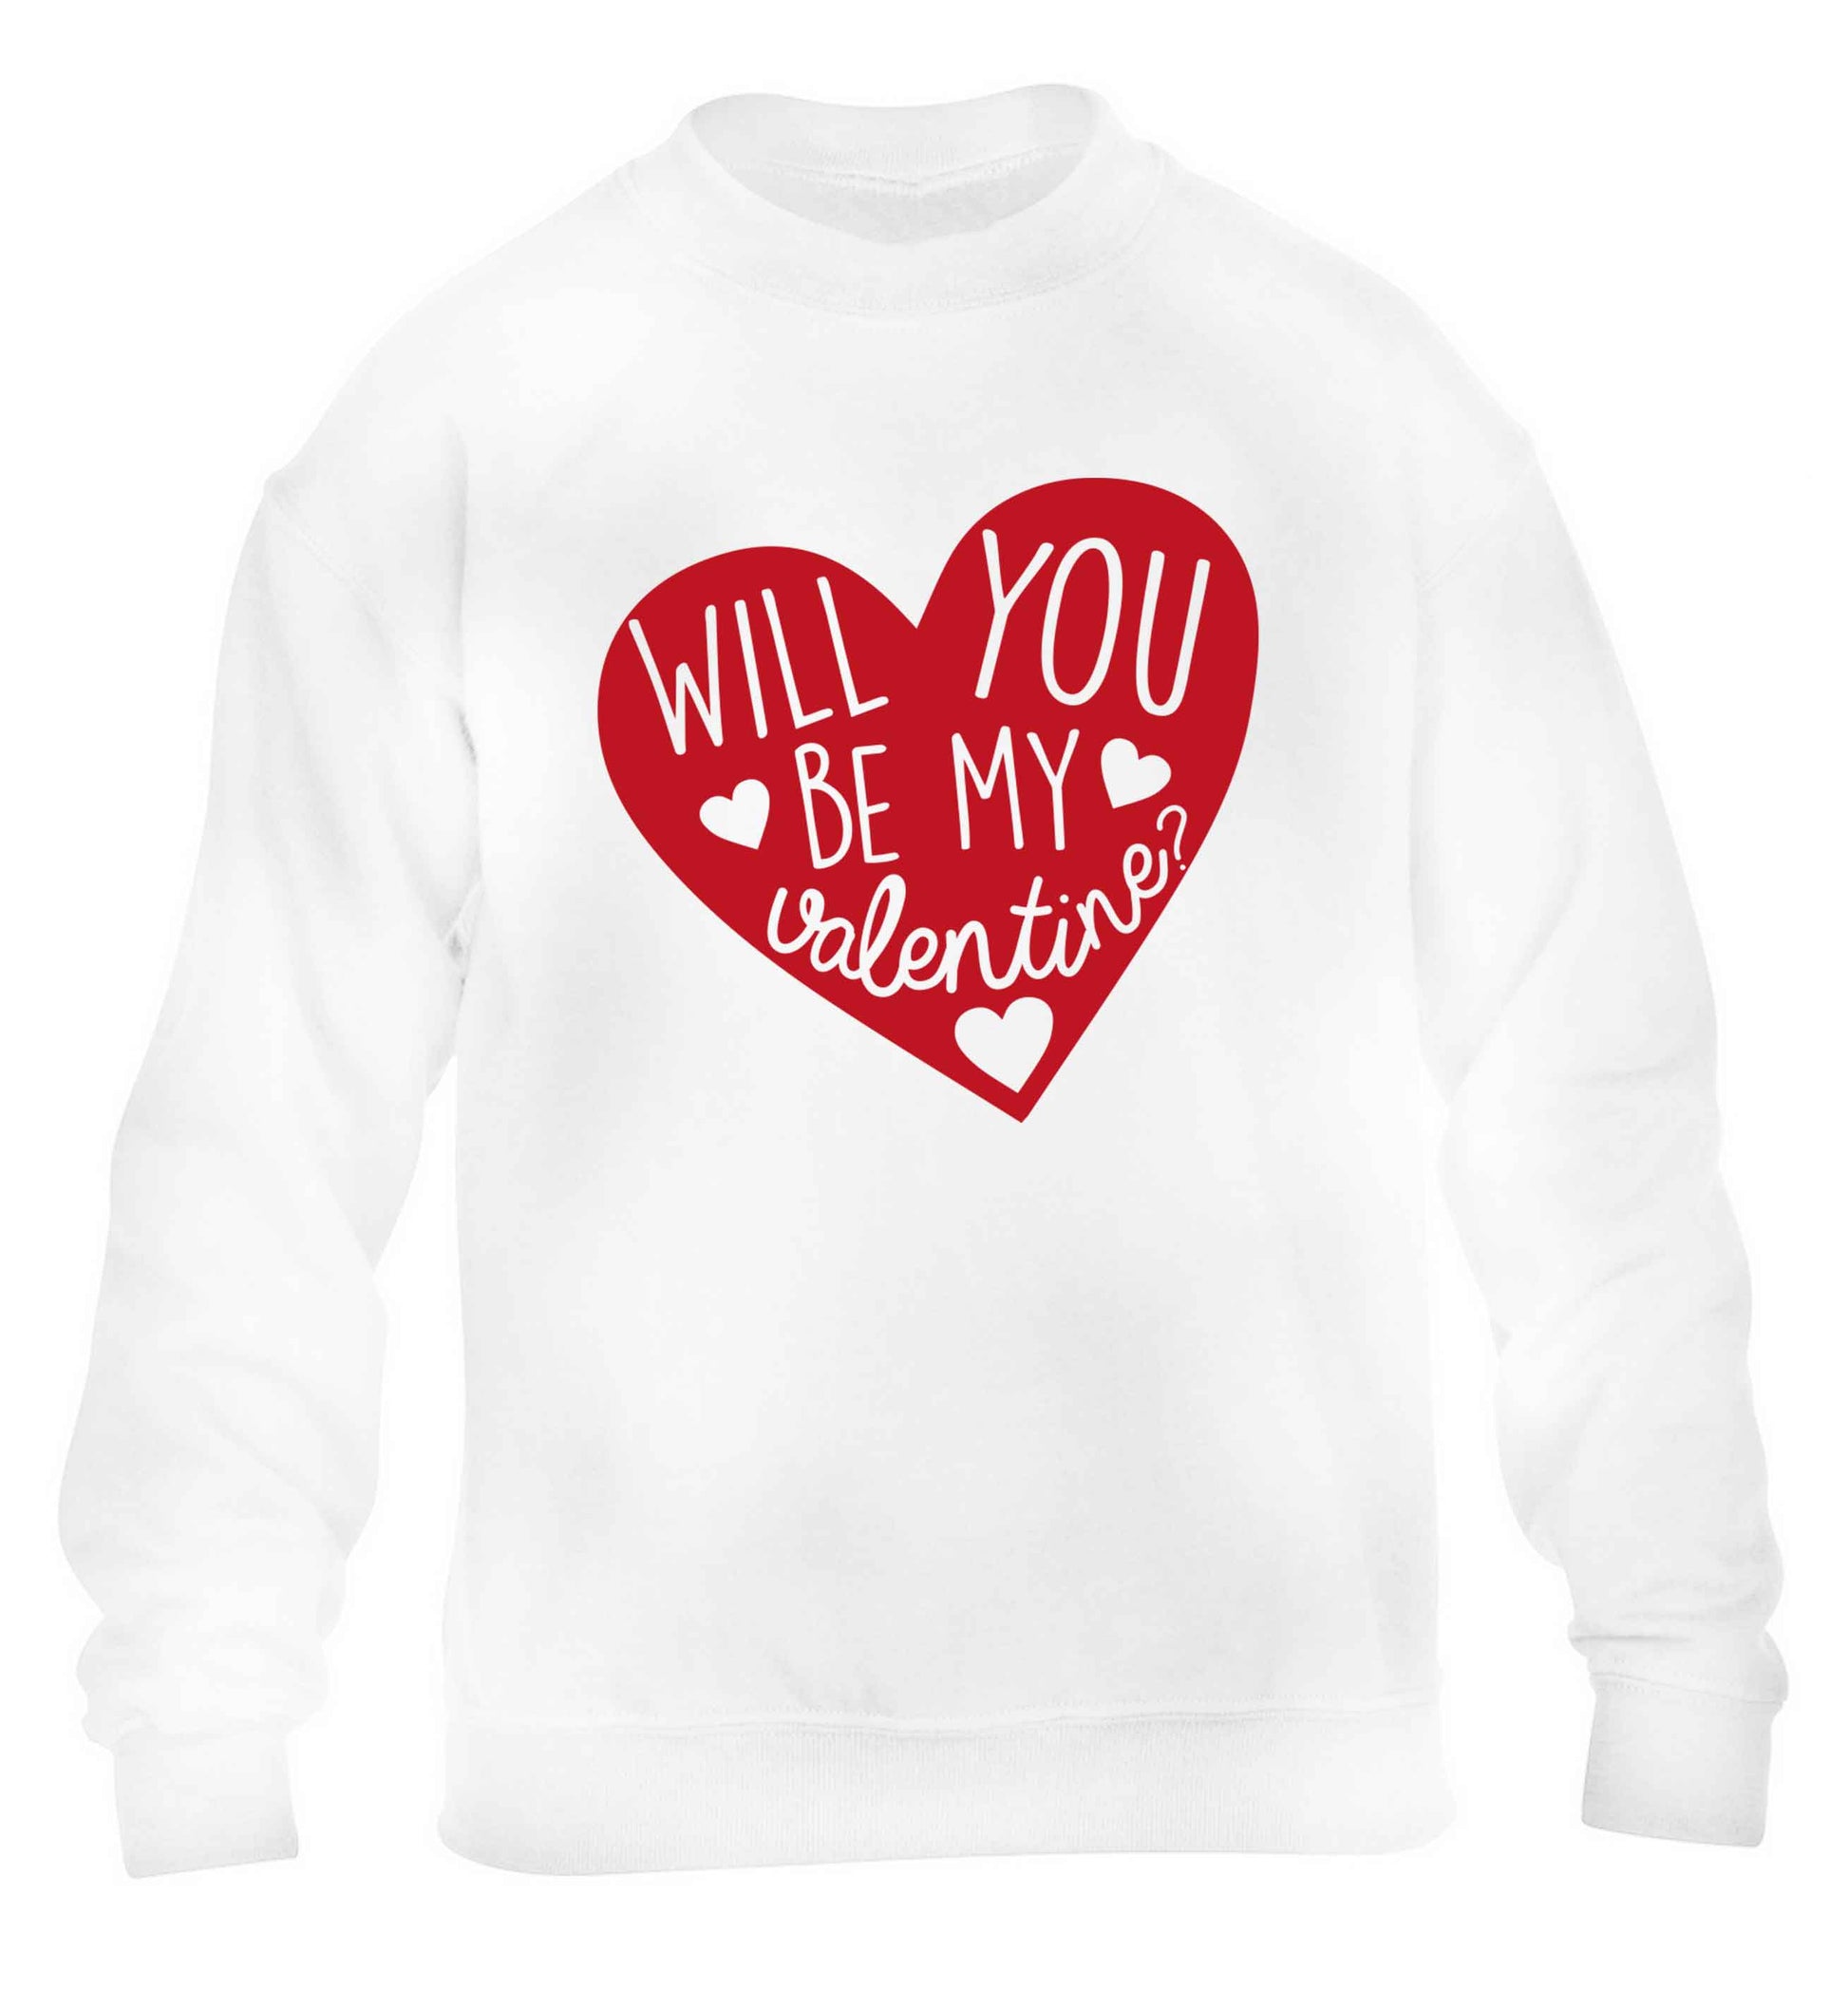 Will you be my valentine? children's white sweater 12-13 Years